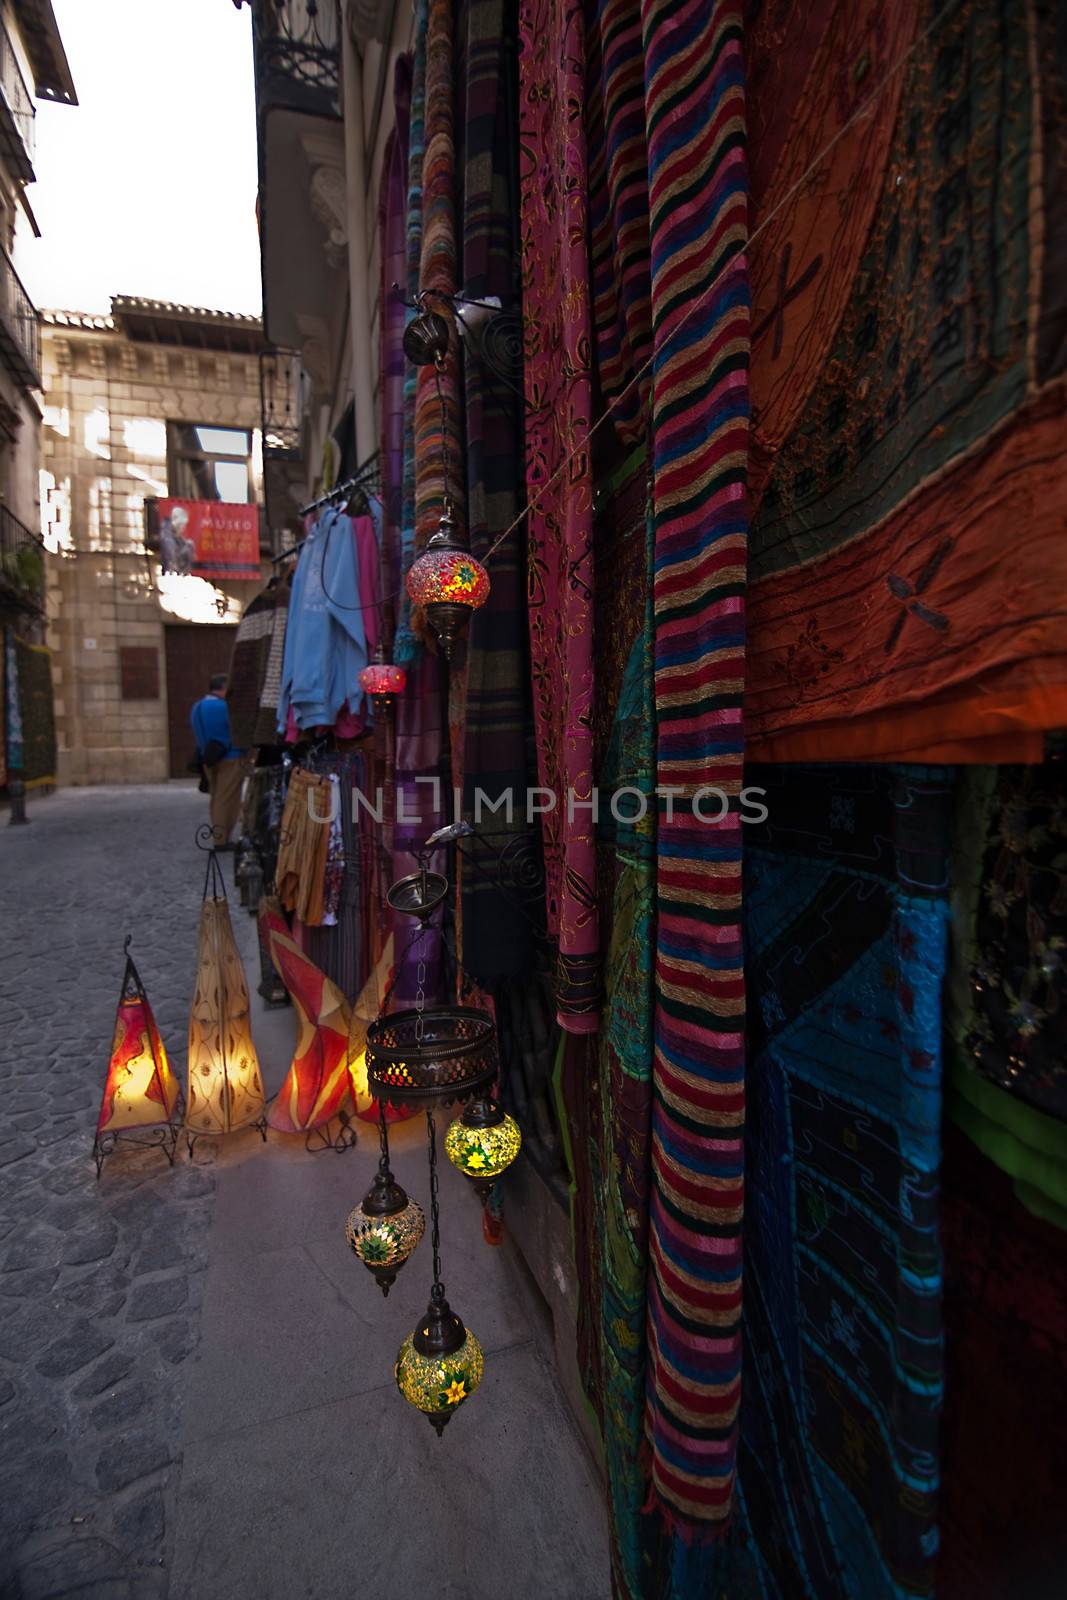 Souvenir shop, Granada, Spain by digicomphoto